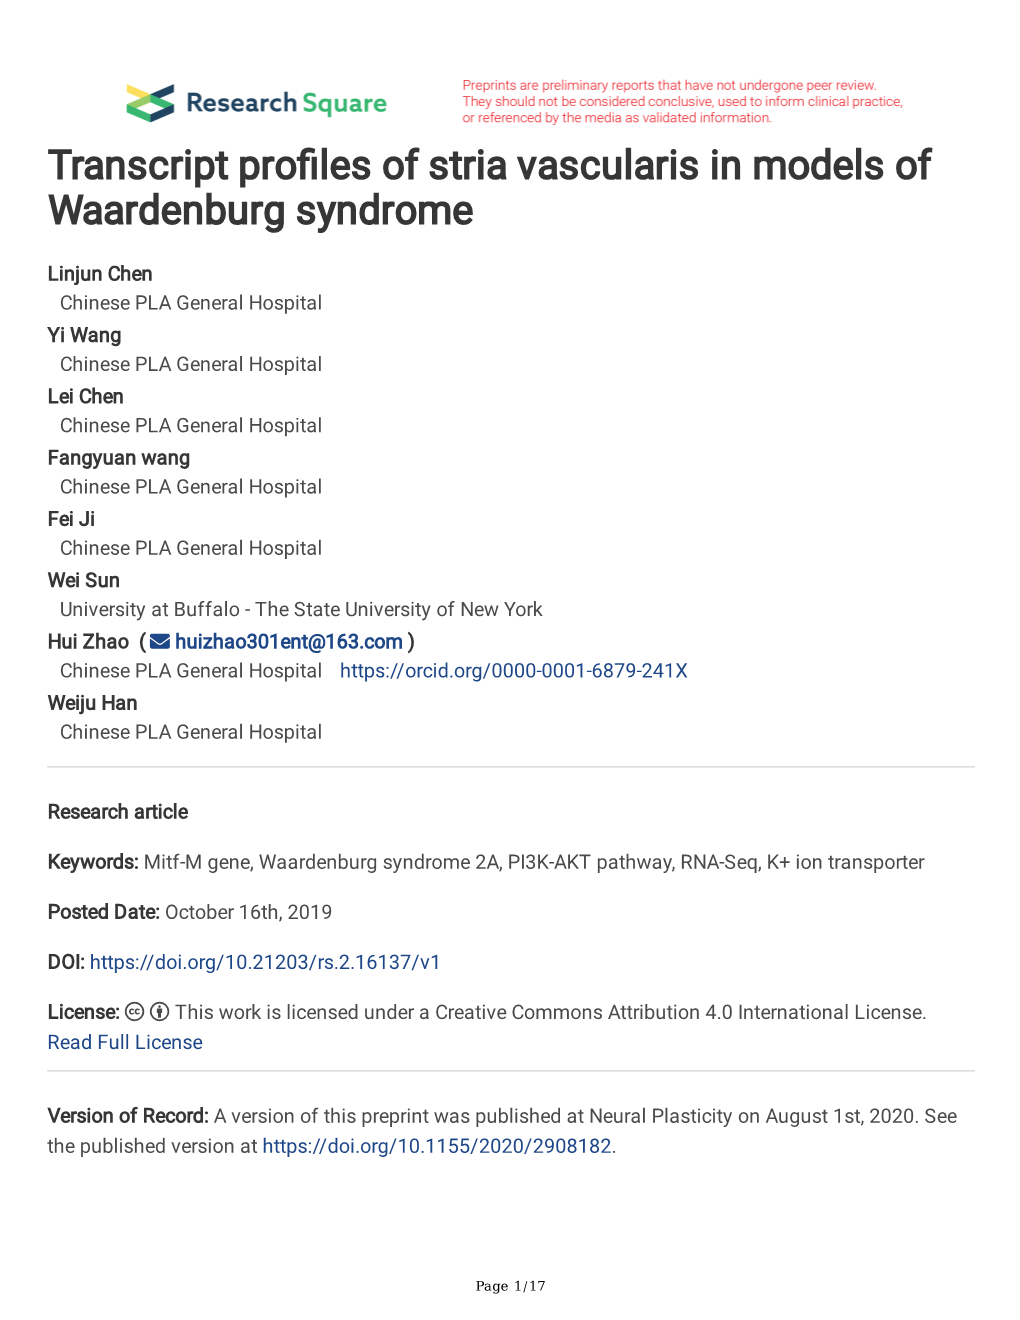 Transcript Profiles of Stria Vascularis in Models of Waardenburg Syndrome